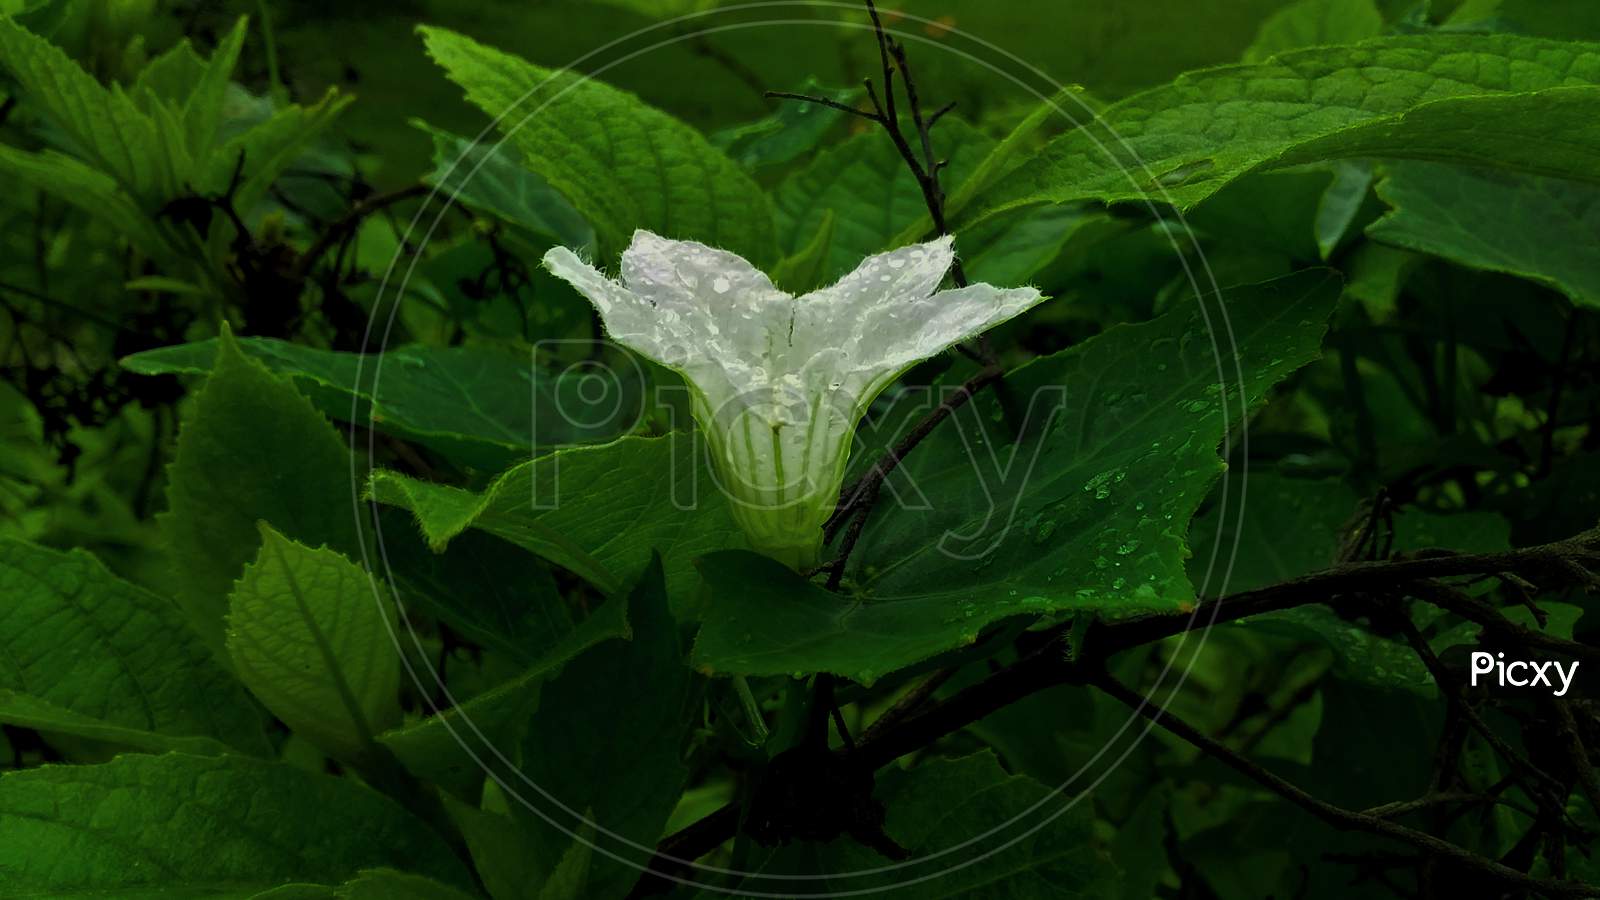 white flower and green leaf in rain